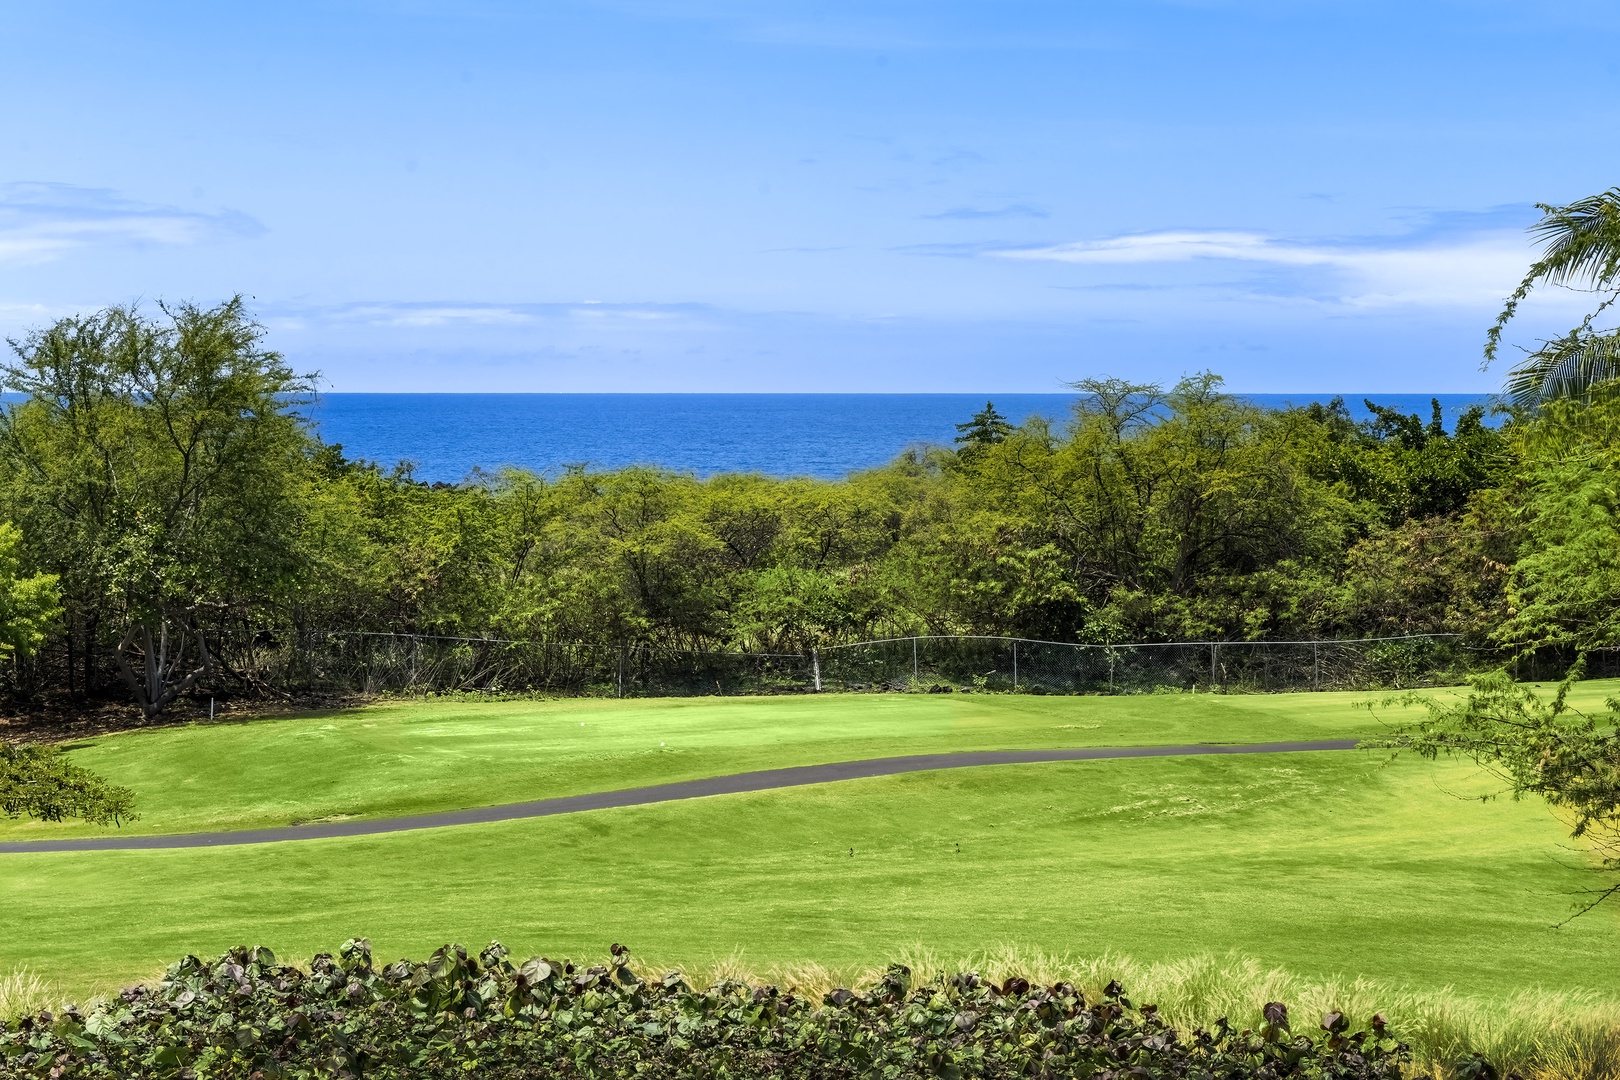 Kailua Kona Vacation Rentals, Golf Green - Golf Course backdrop!